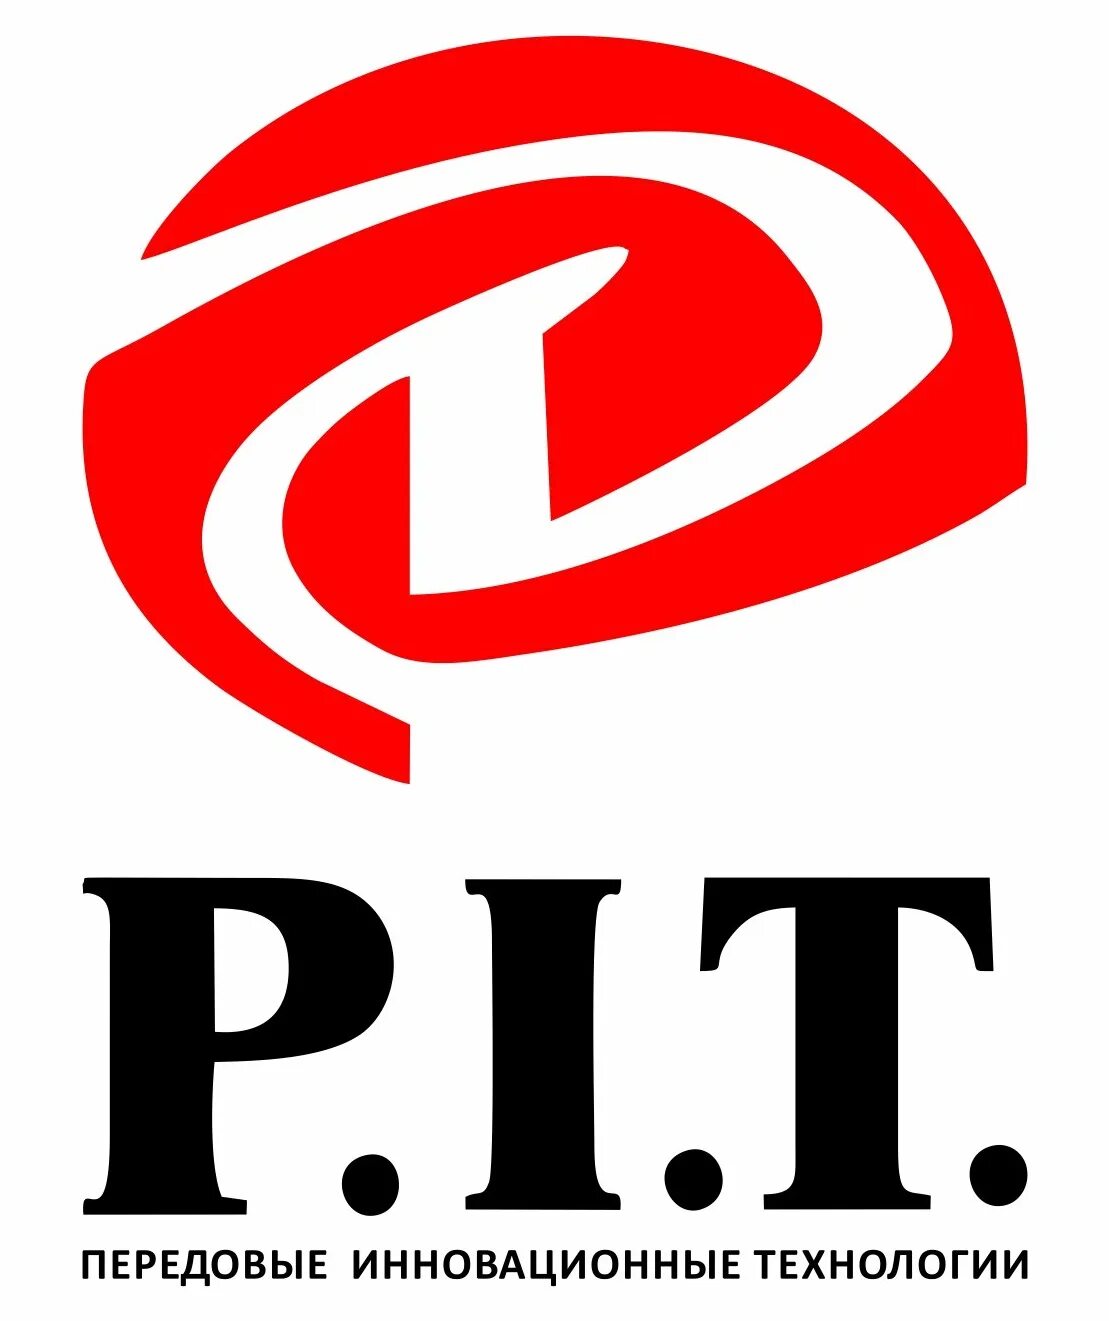 Вб пит. Pit логотип. Инструмент пит логотип. Pit электроинструмент лого. P.I.T логотип инструмент.